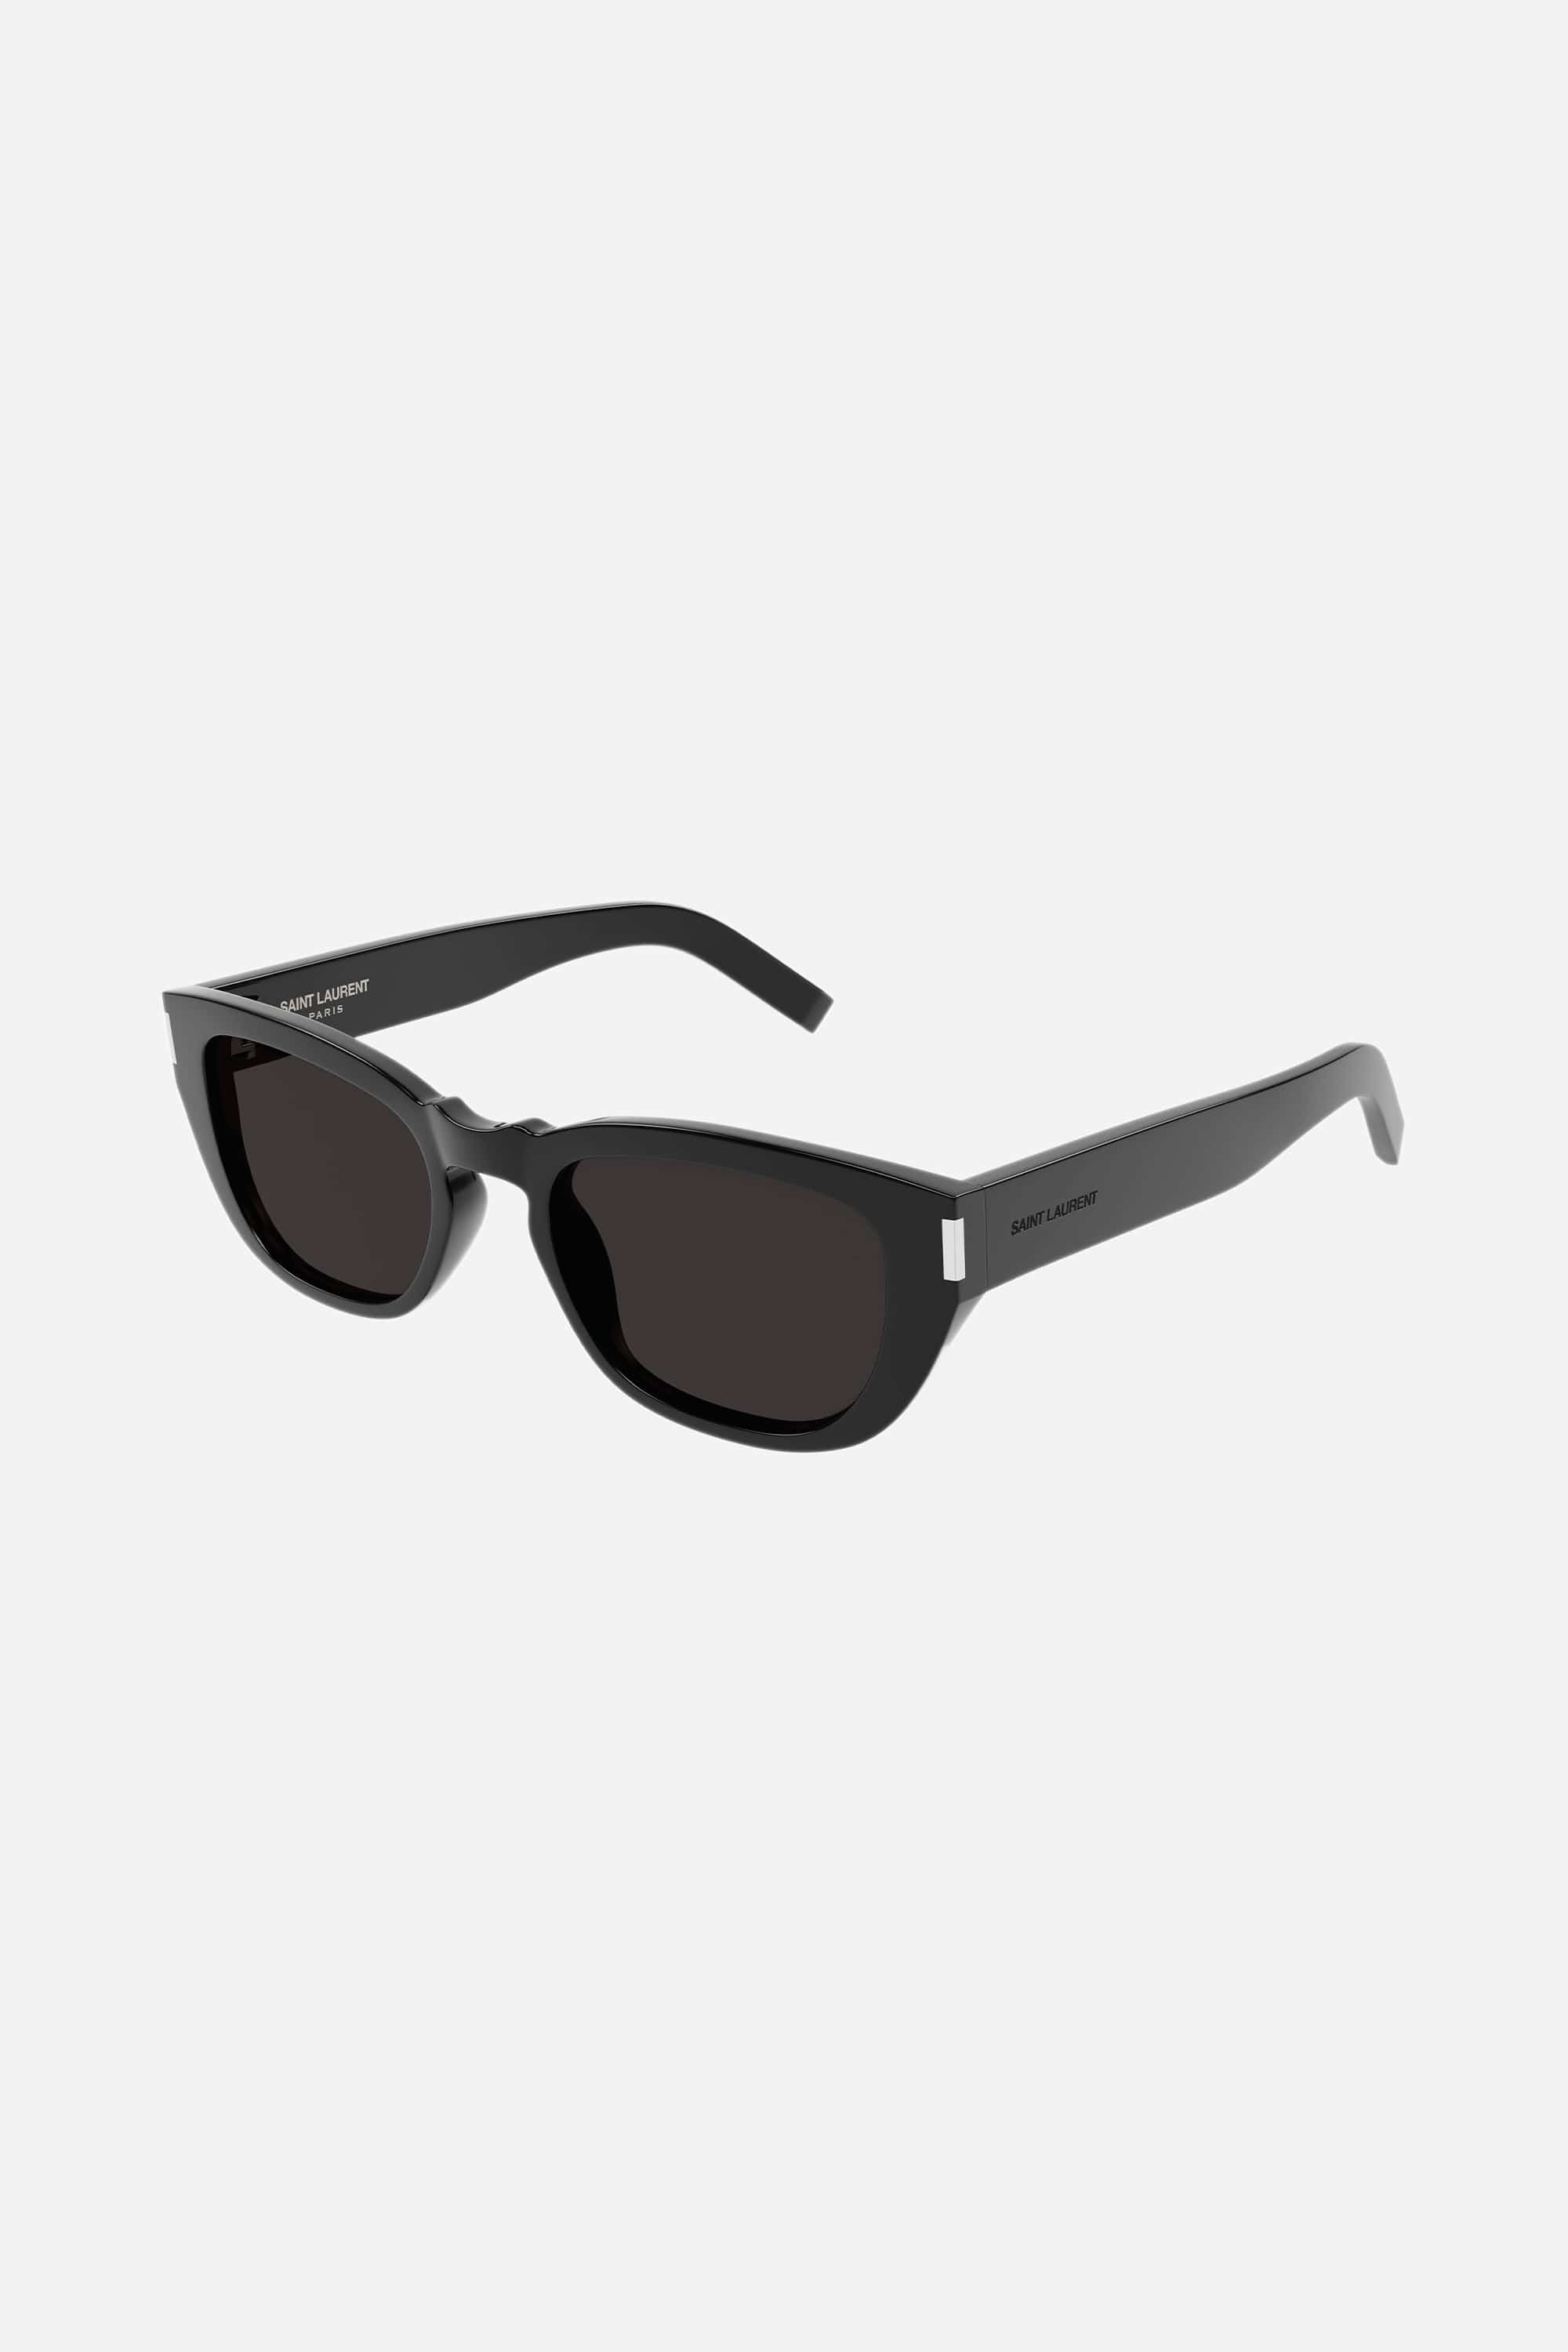 Saint Laurent rectangular soft sunglasses - Eyewear Club